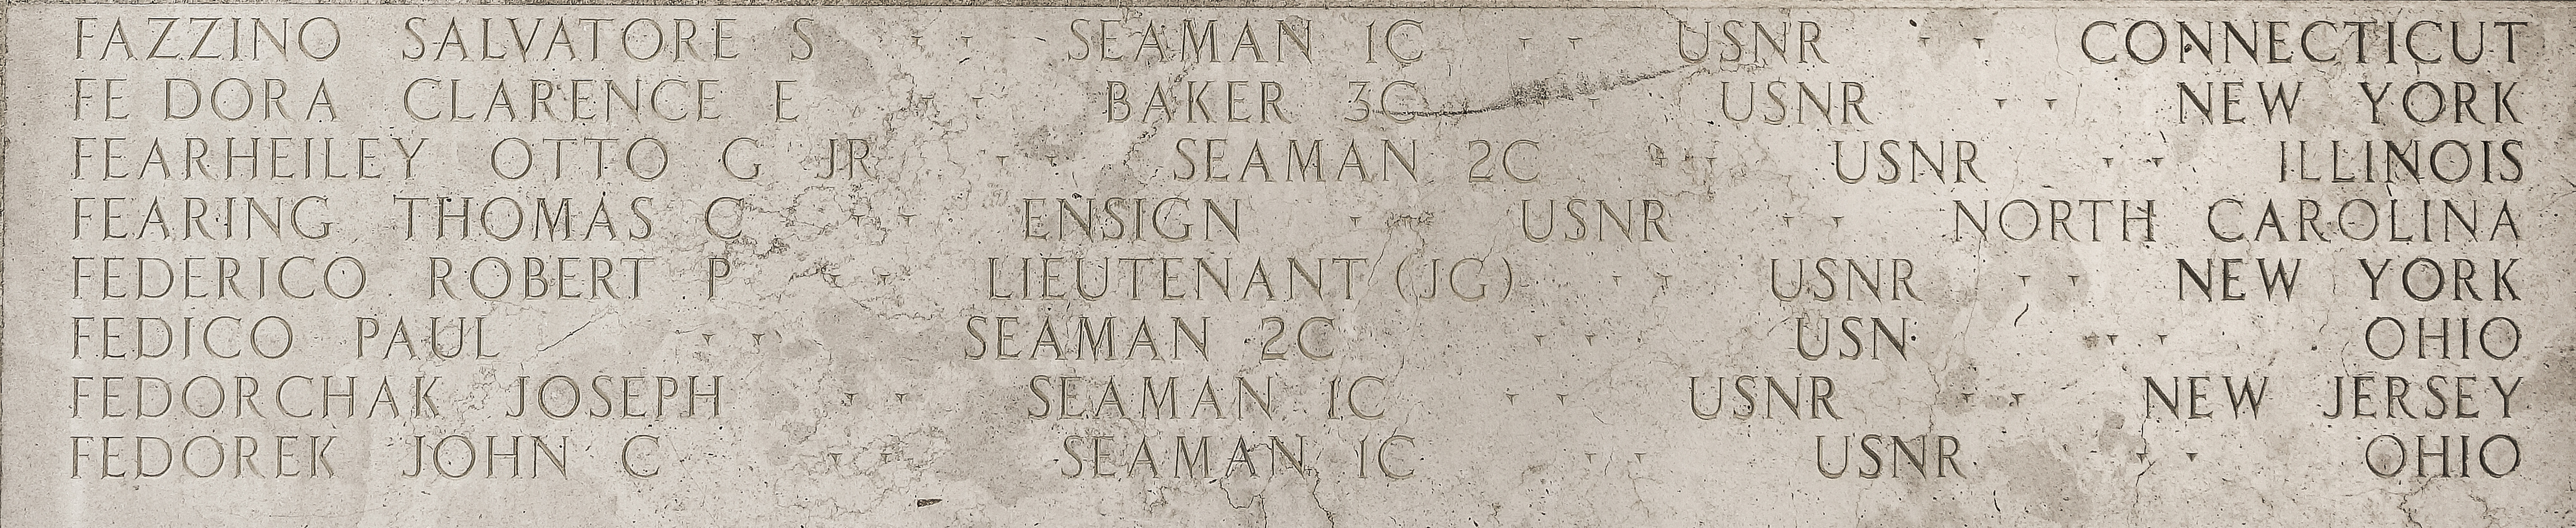 Otto G. Fearheiley, Seaman Second Class